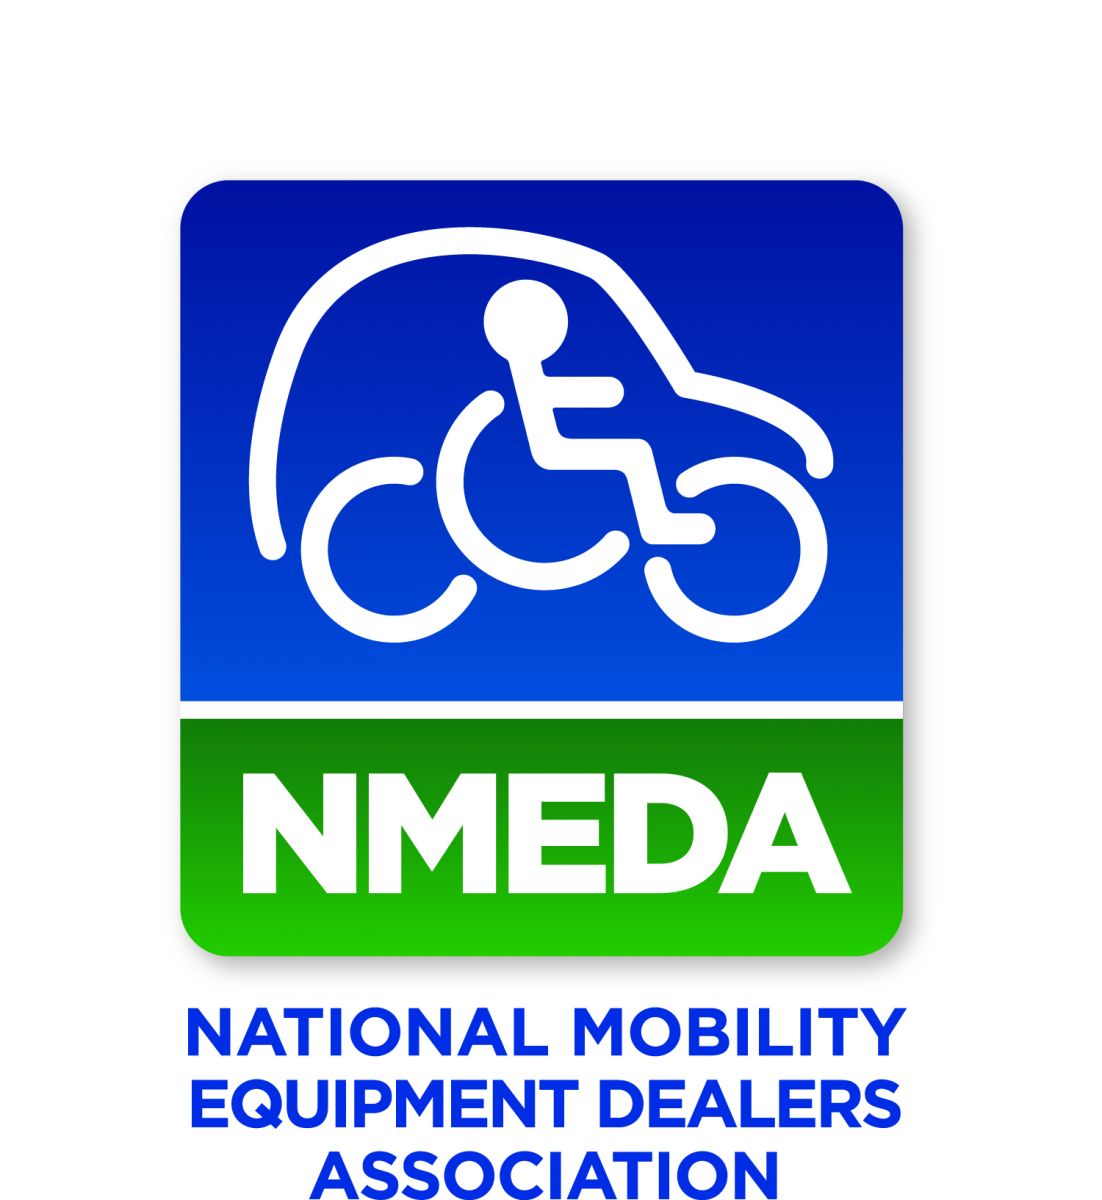 National Mobility Equipment Dealers Association (NMEDA) logo